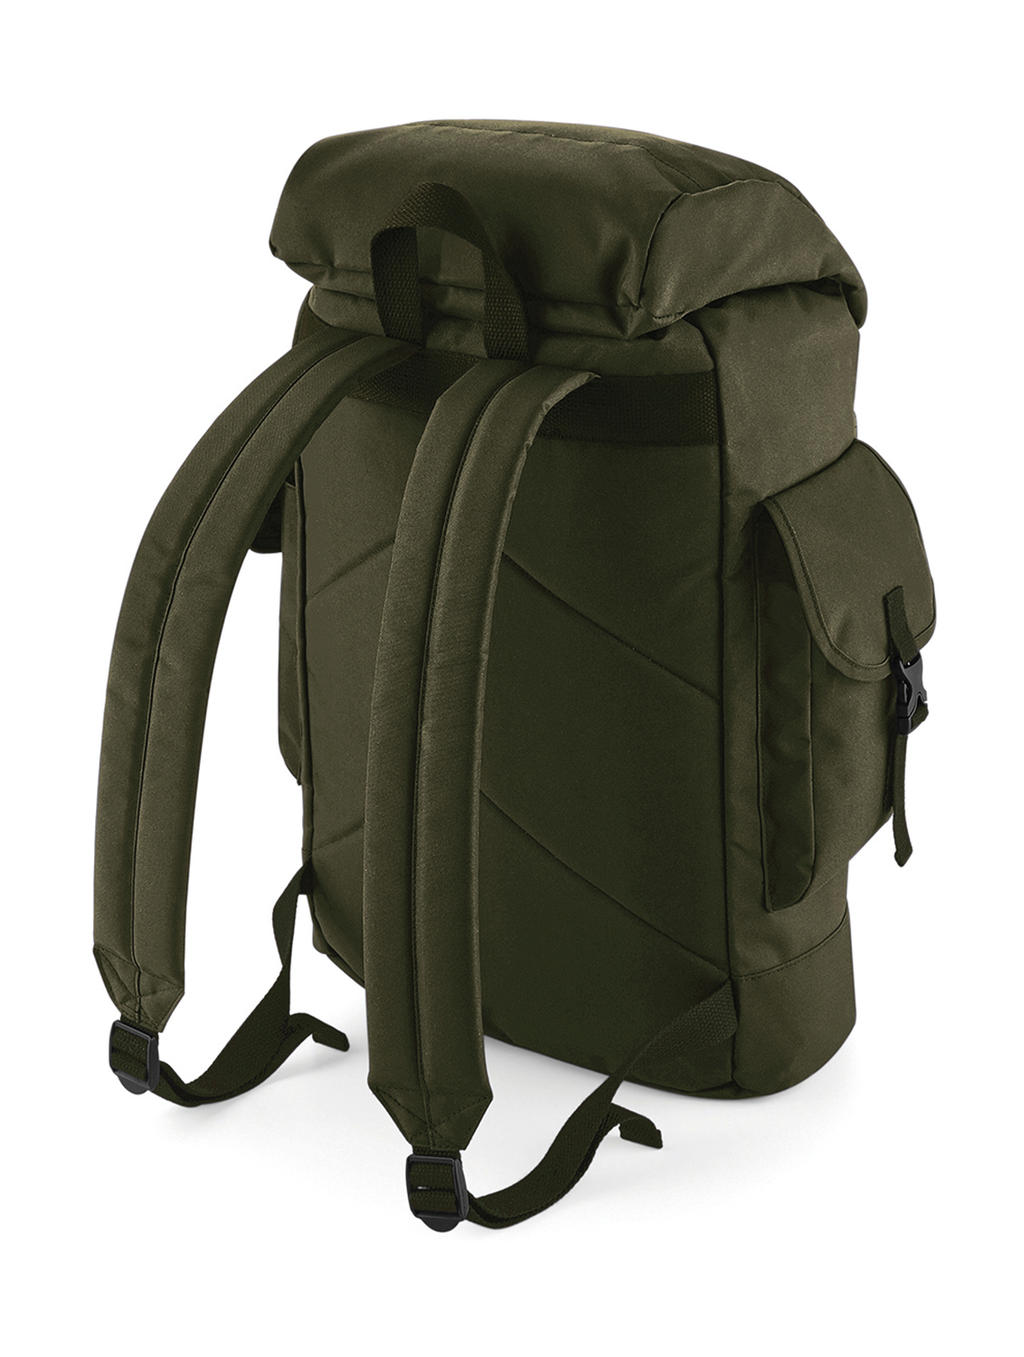  Urban Explorer Backpack in Farbe Black/Tan